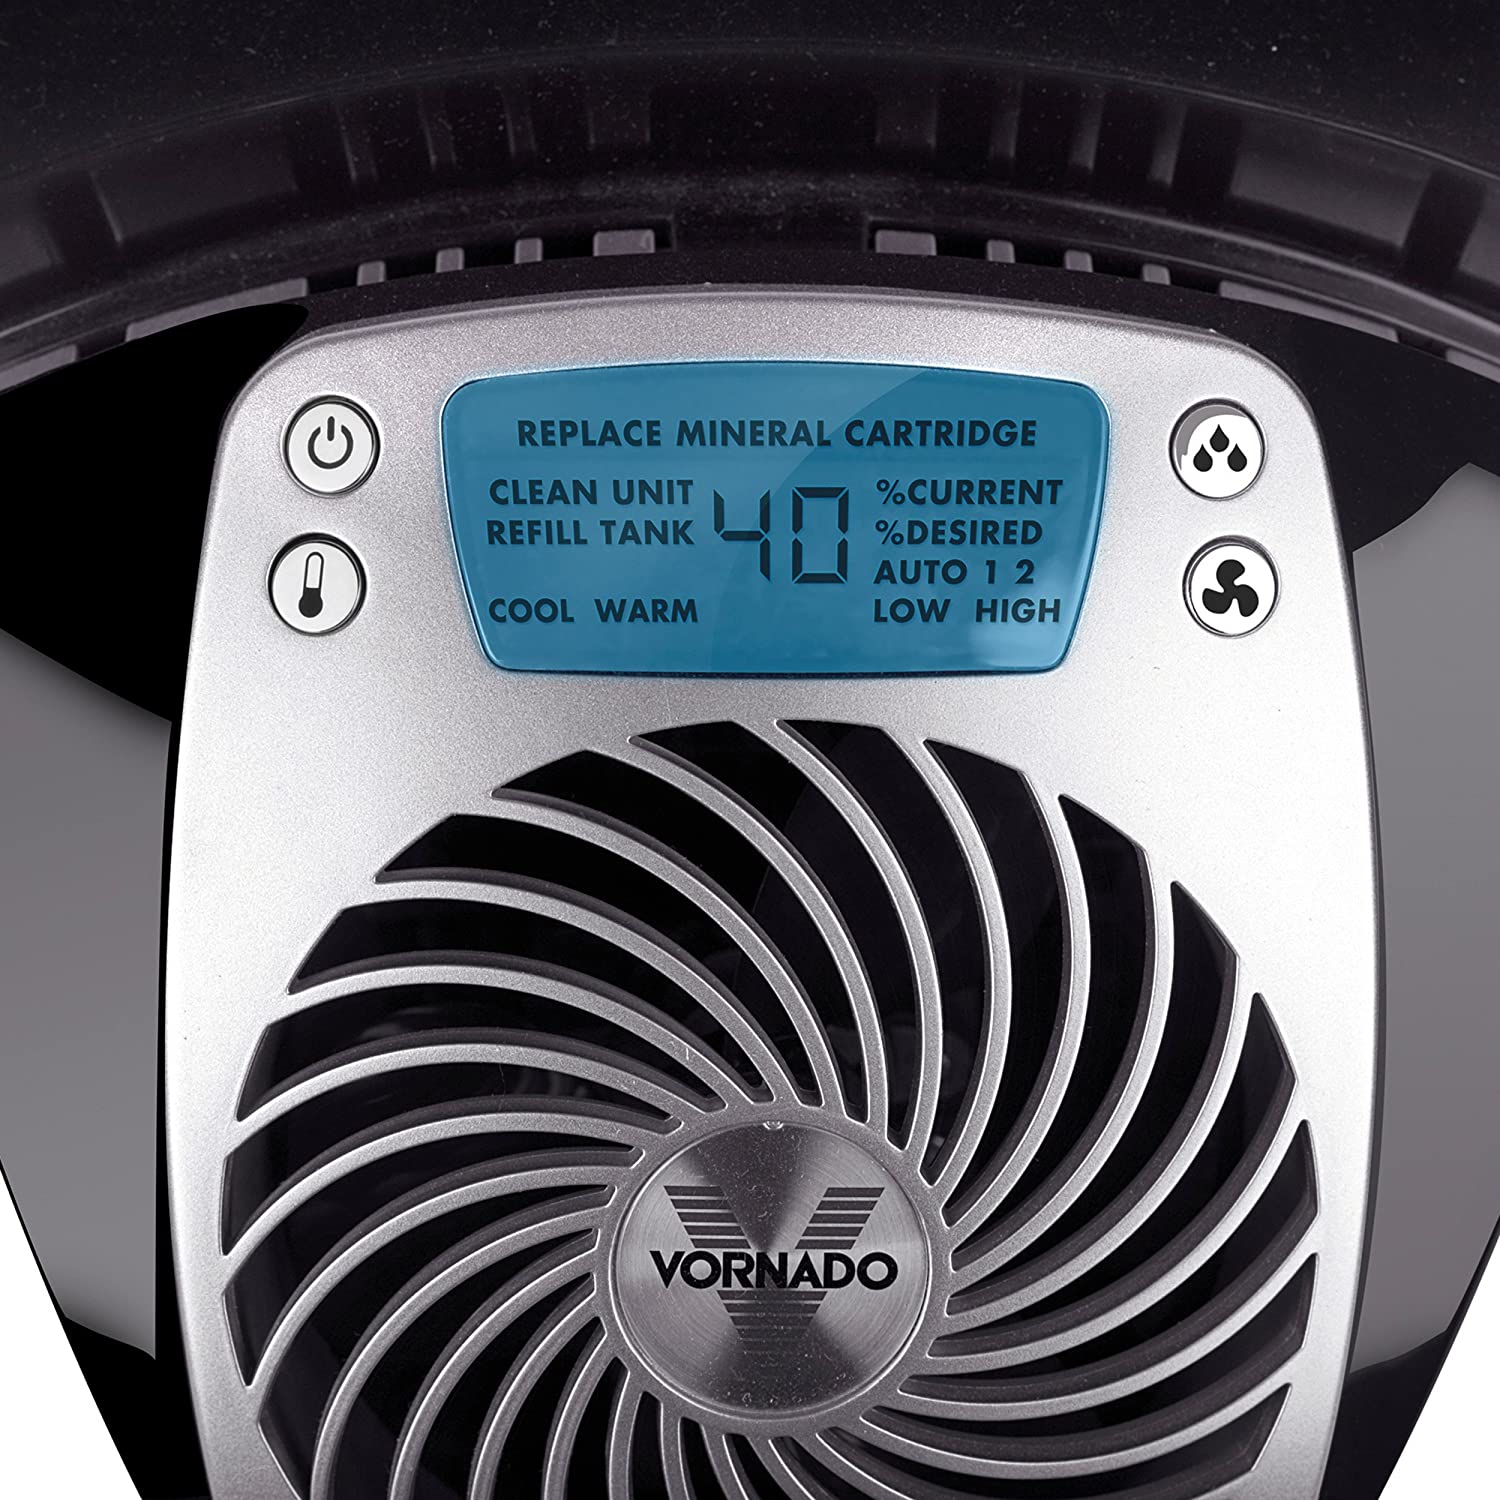 Vornado Ultra 1 Humidifier Review